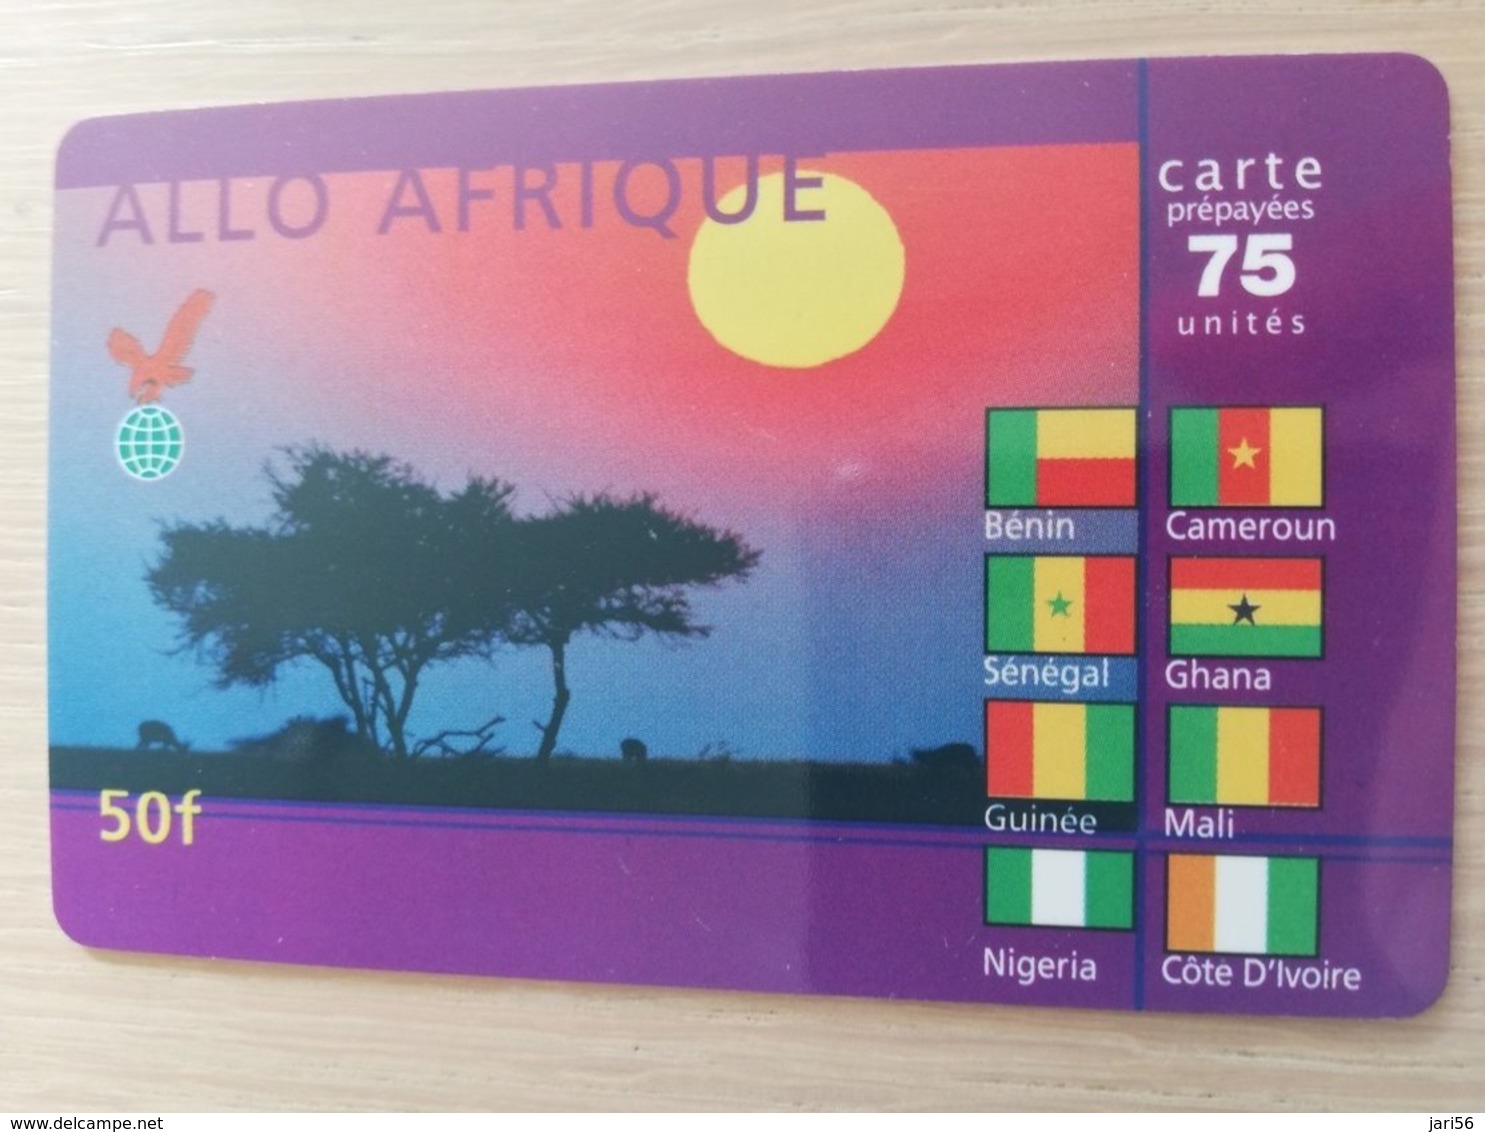 FRANCE/FRANKRIJK  ALLO   AFRICA  75 UNITS PREPAID  USED    ** 1508** - Prepaid: Mobicartes